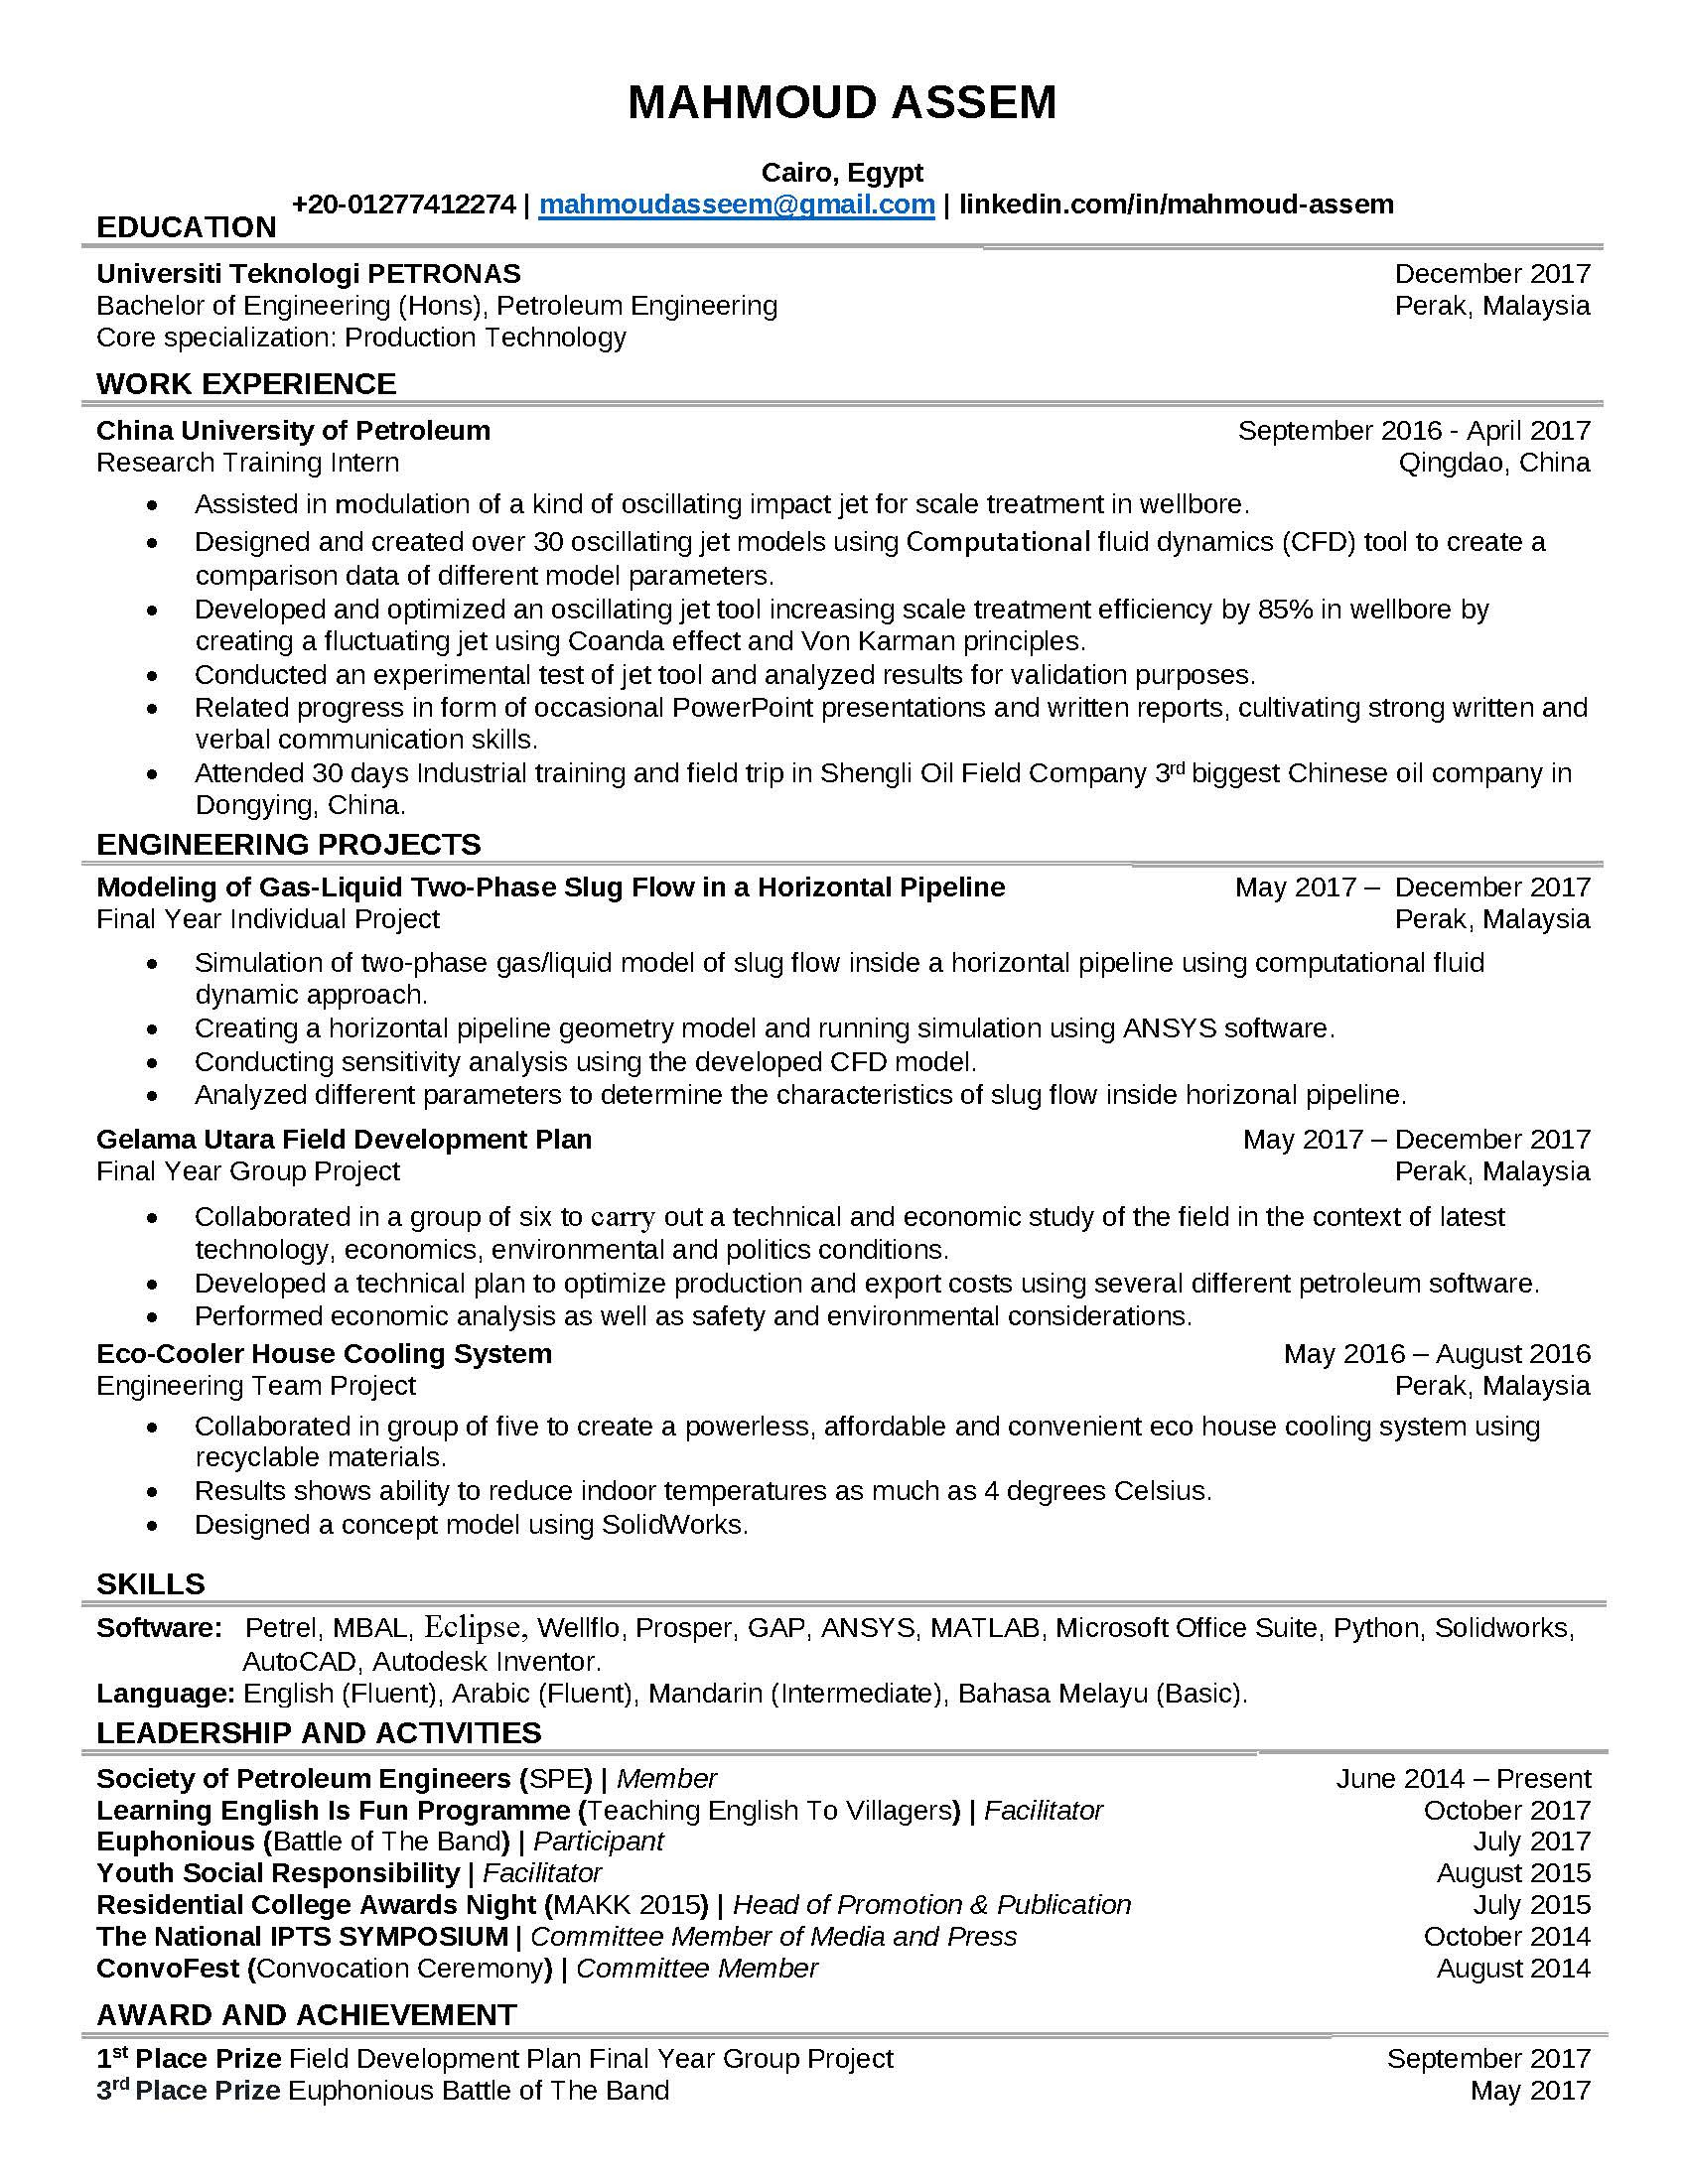 Resume Sample for A Petroleum Engineer Petroleum Engineering Fresh Graduate 1st Draft Resume, Would Like …